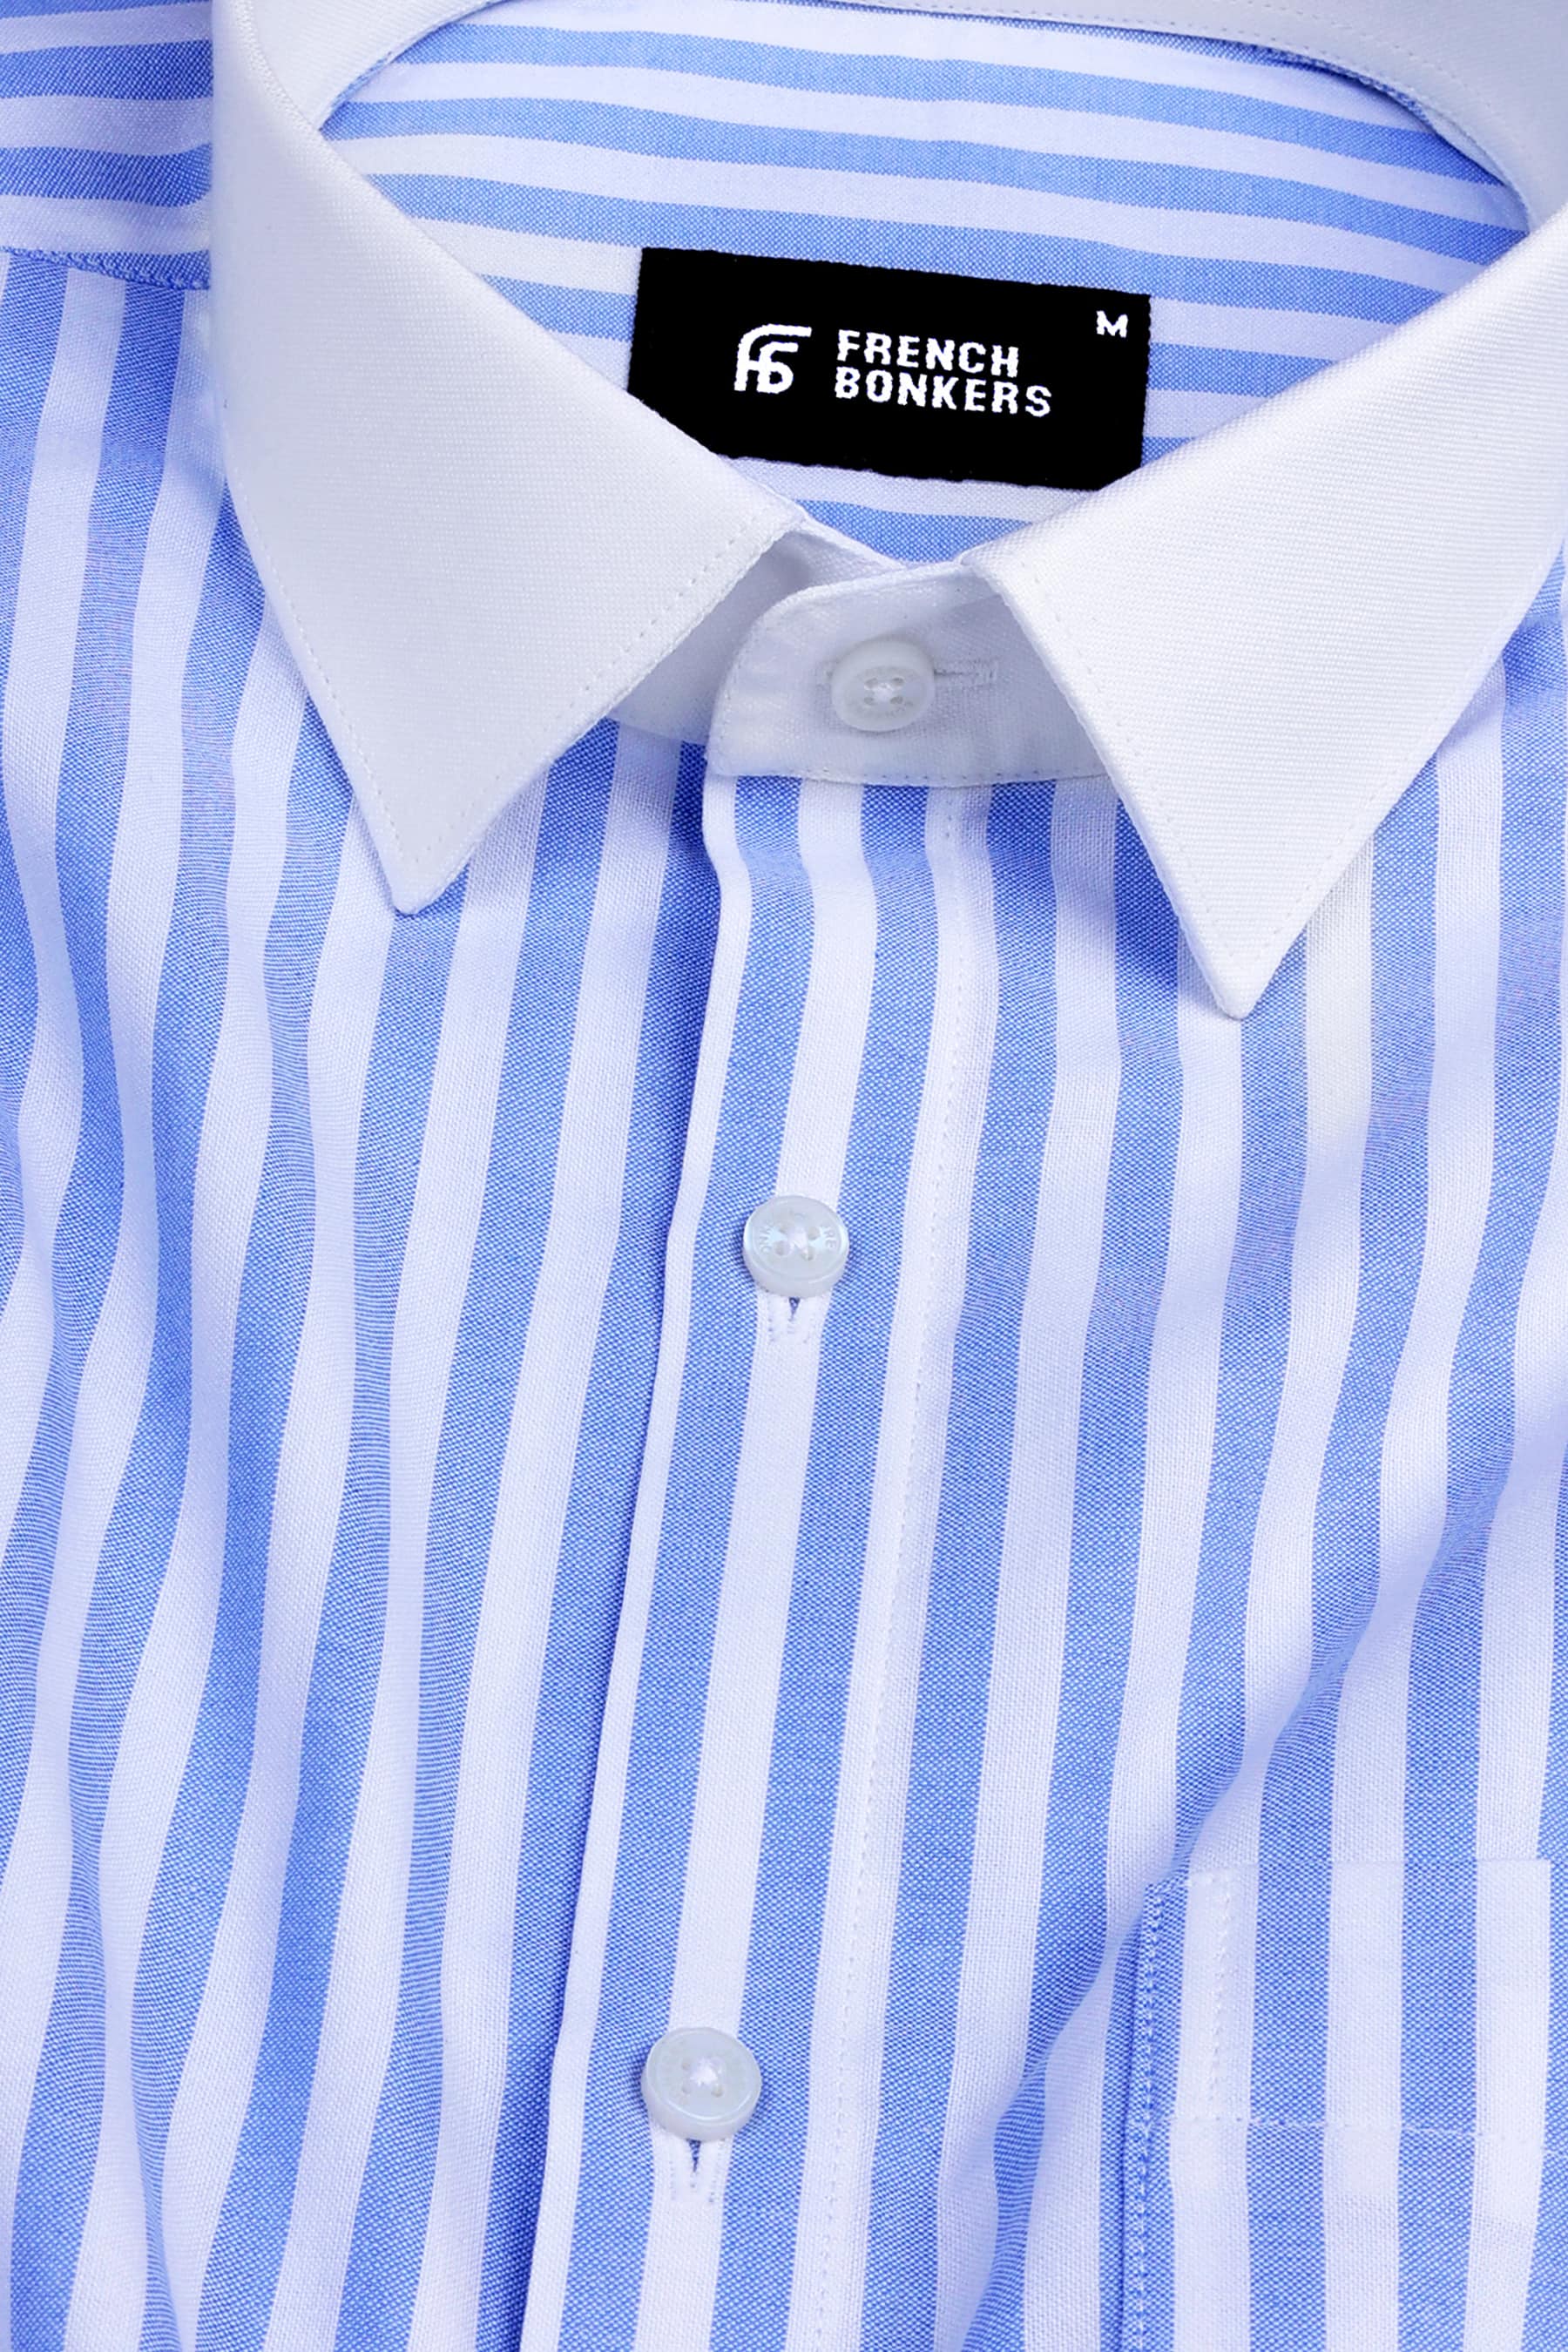 Cornflower blue with white oxford bengal stripe shirt